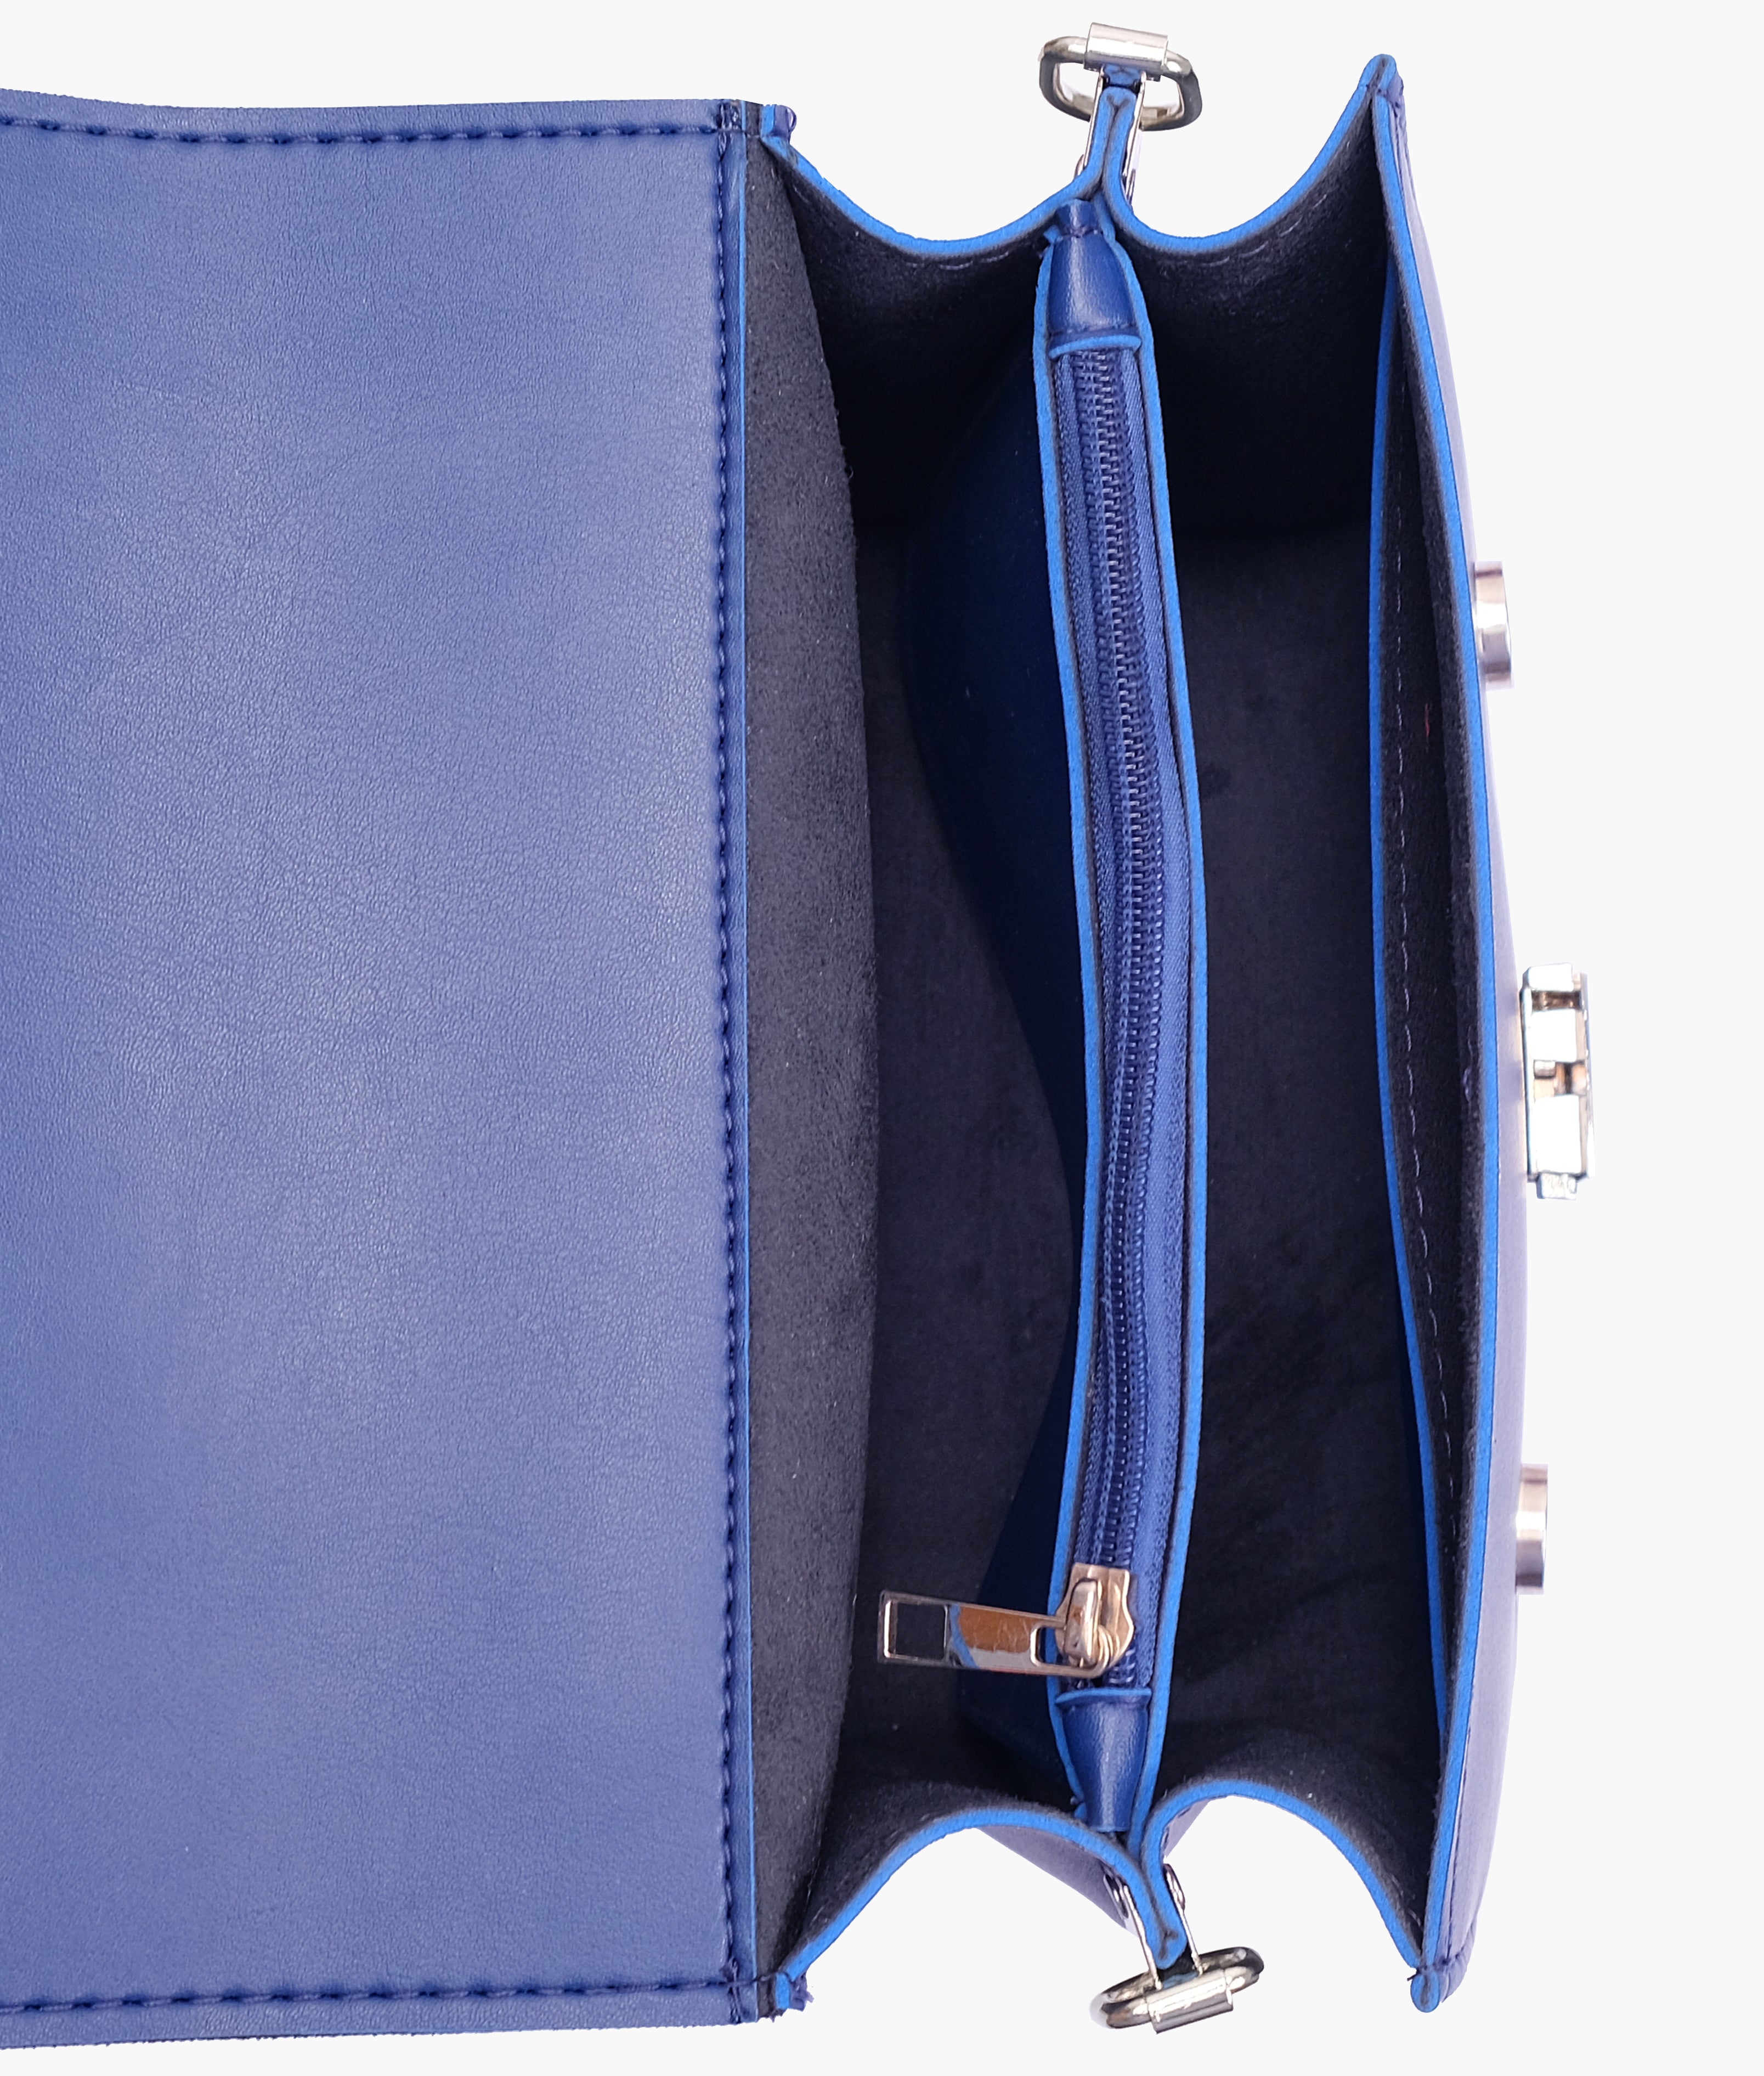 Blue top-handle mini cross-body bag